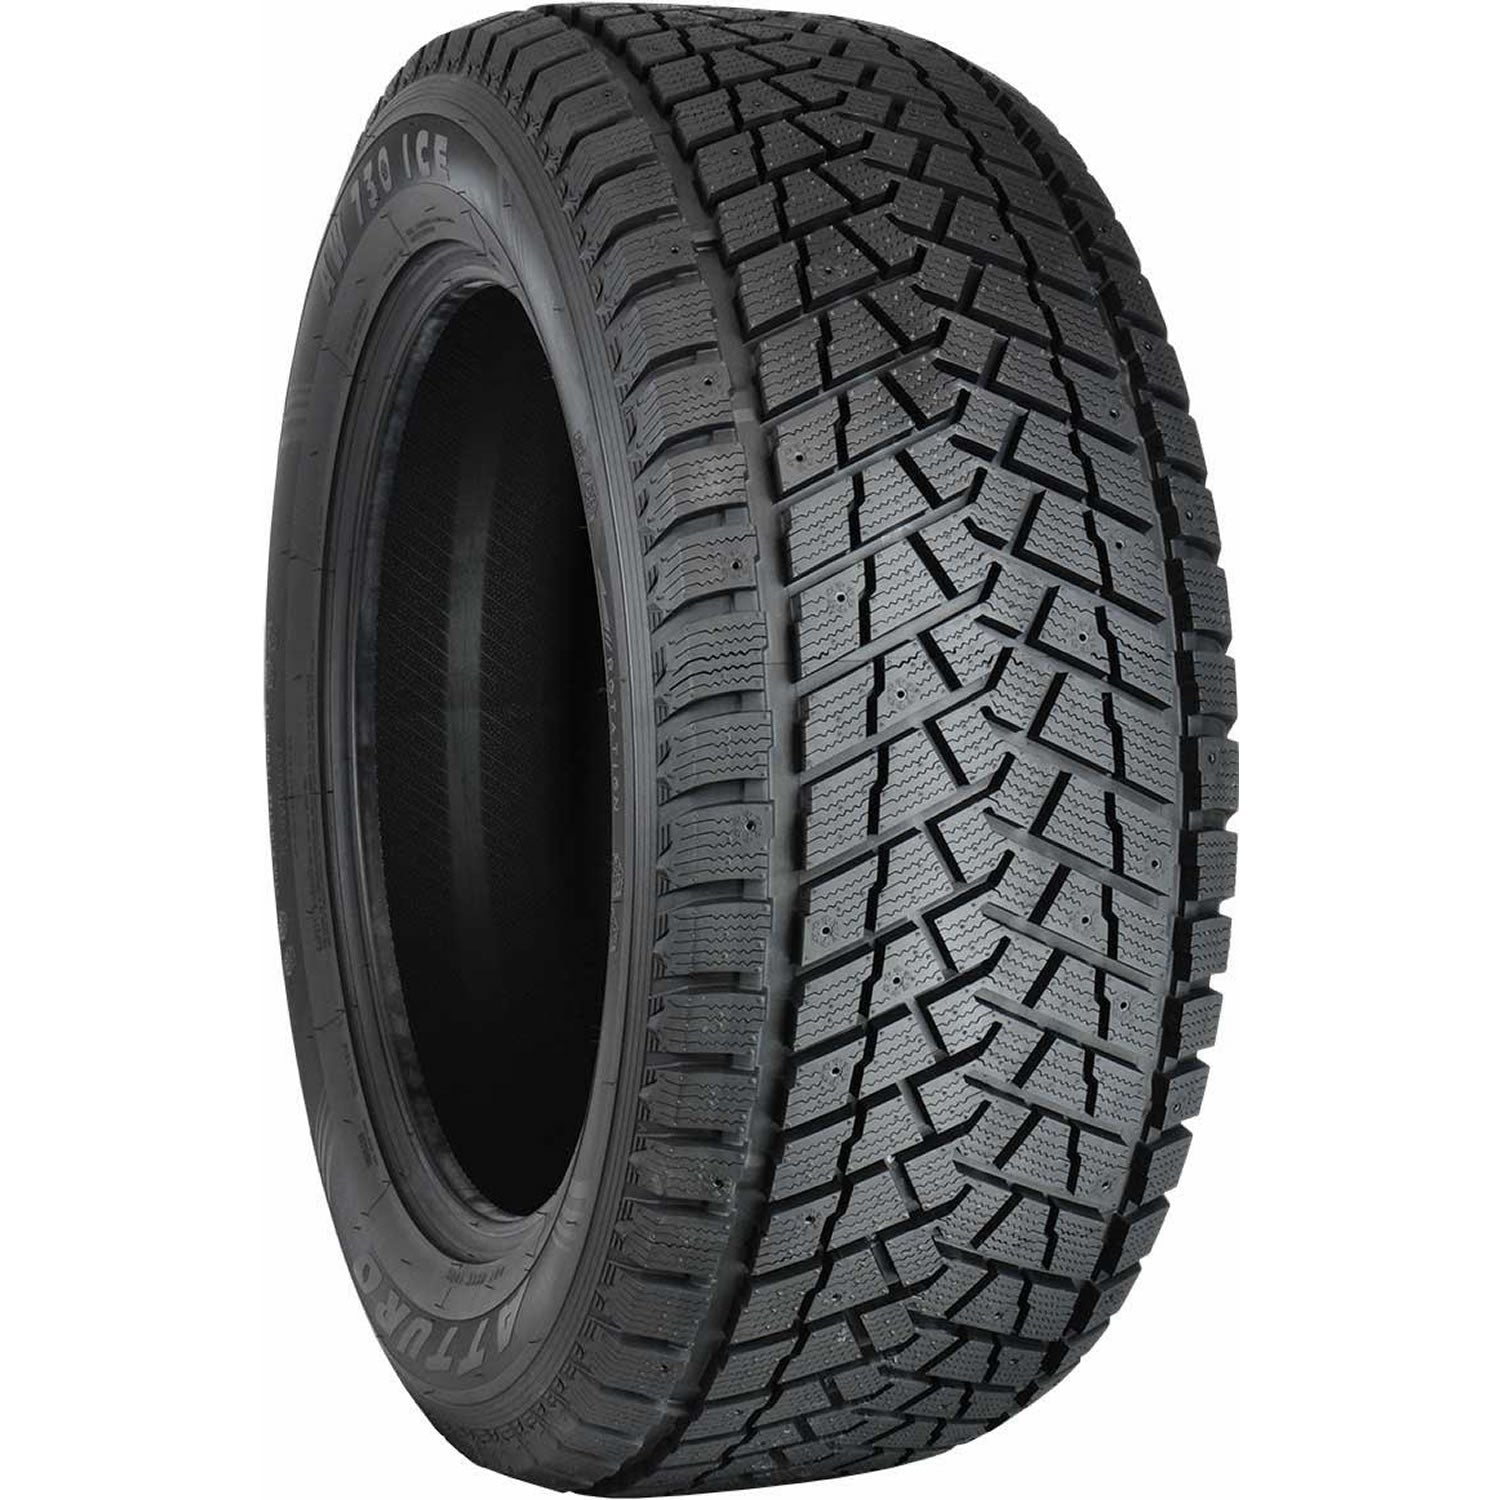 ATTURO AW730 ICE 265/65R17 (30.6X10.7R 17) Tires